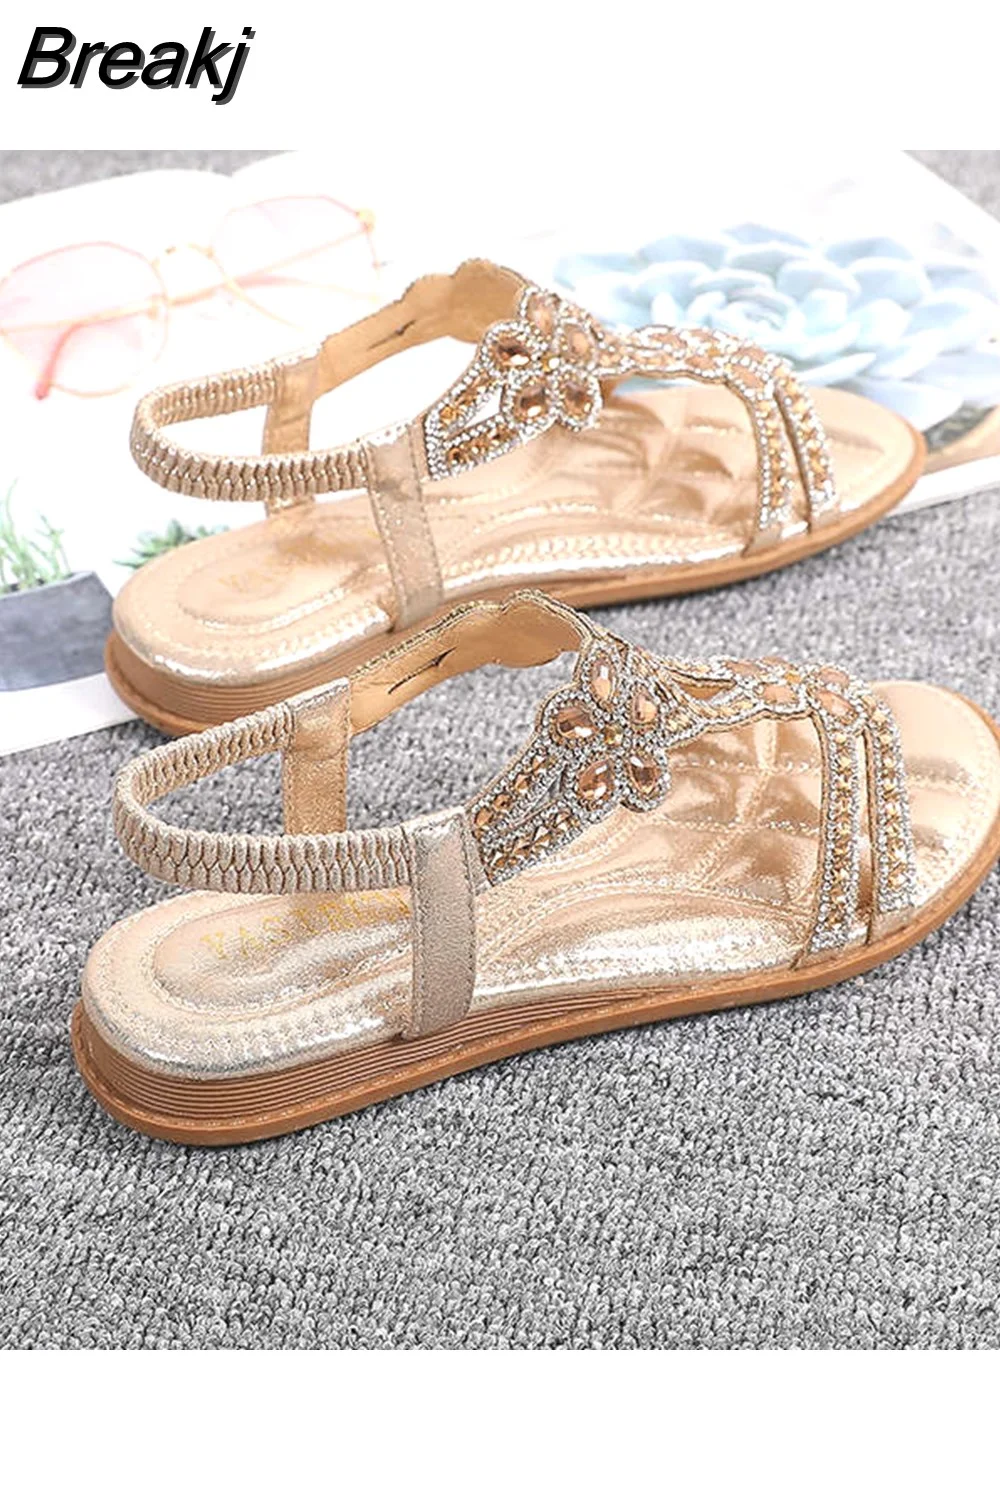 Breakj Casual Silver Ladies Flat Slip on Summer Shoes Woman Bohemia Sandal Rhinestones Large Size 42 43 Sandalia Women Sandals